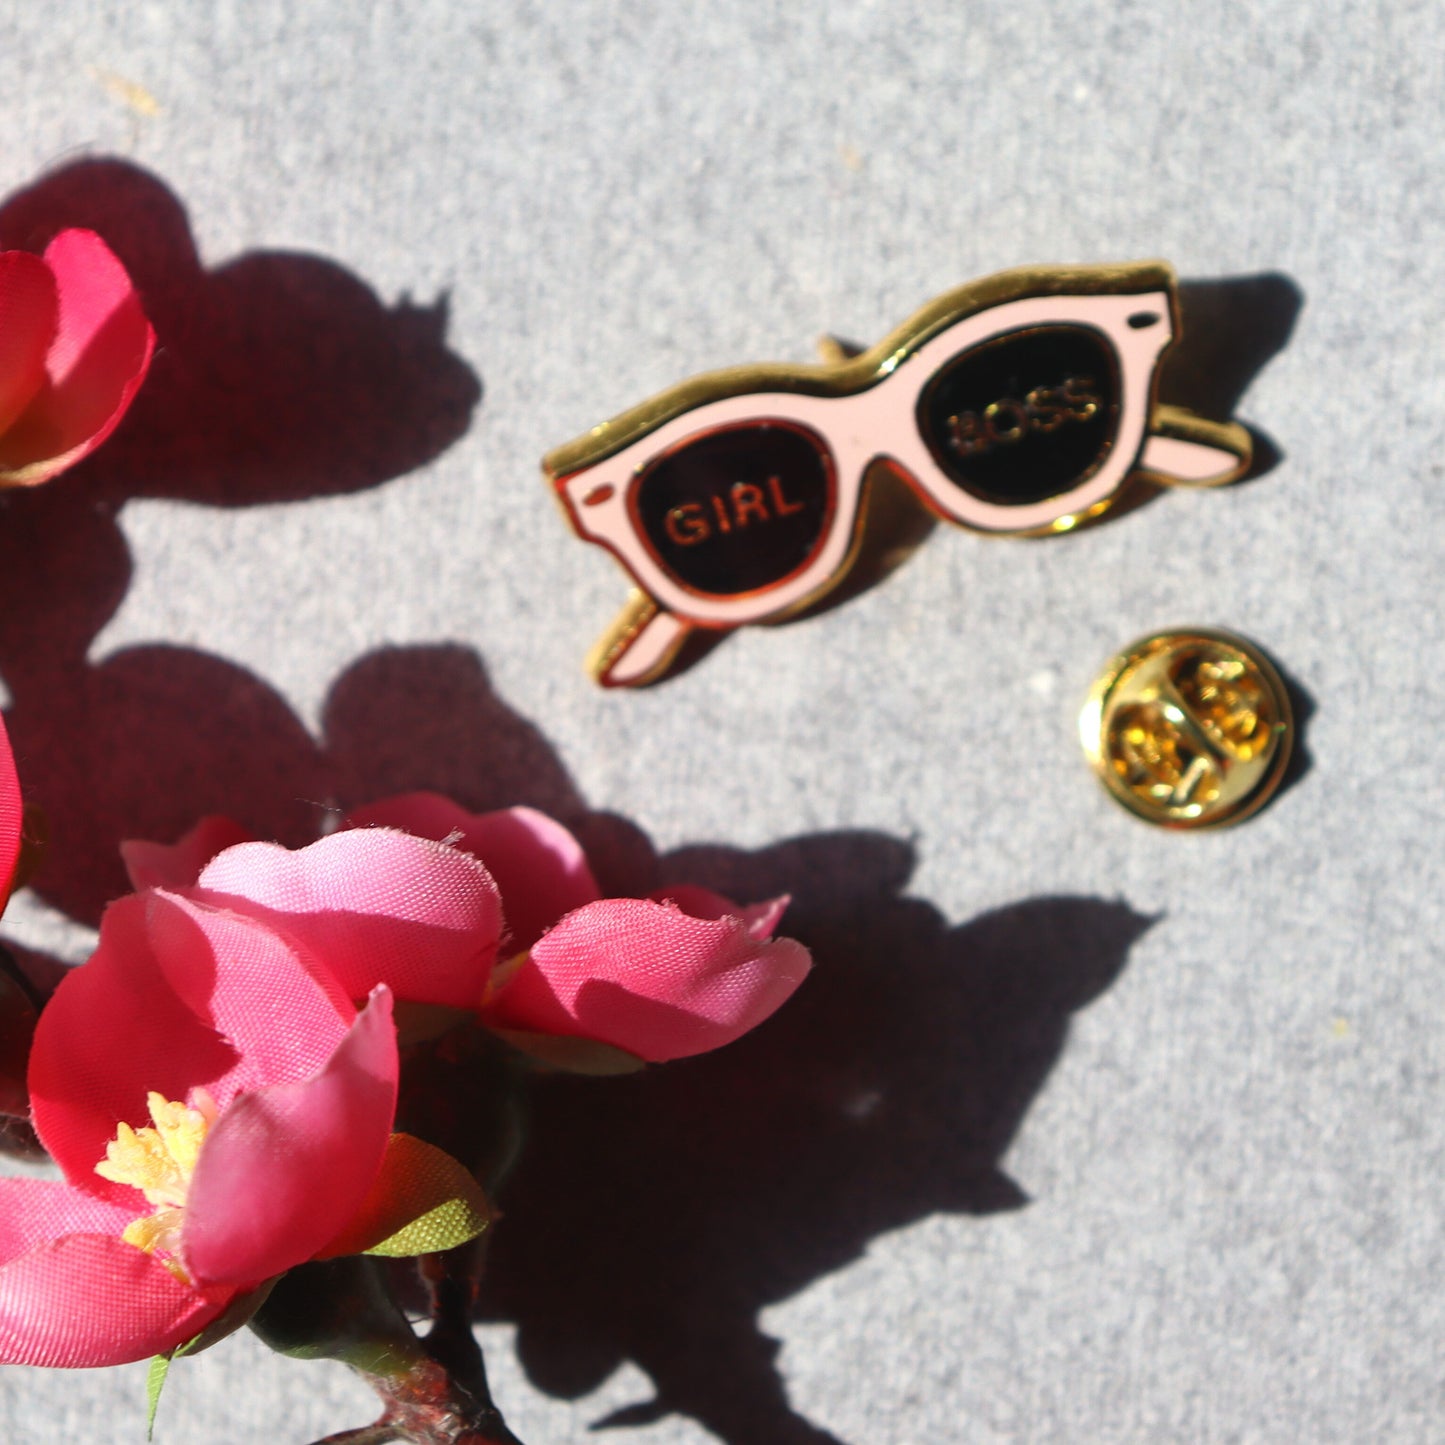 Pink Girl Boss Brooch - Enamel Jewelry, Lapel, Pin, Badge, Charm, Uplifting, Empowering gift - Aksa Home Decor 